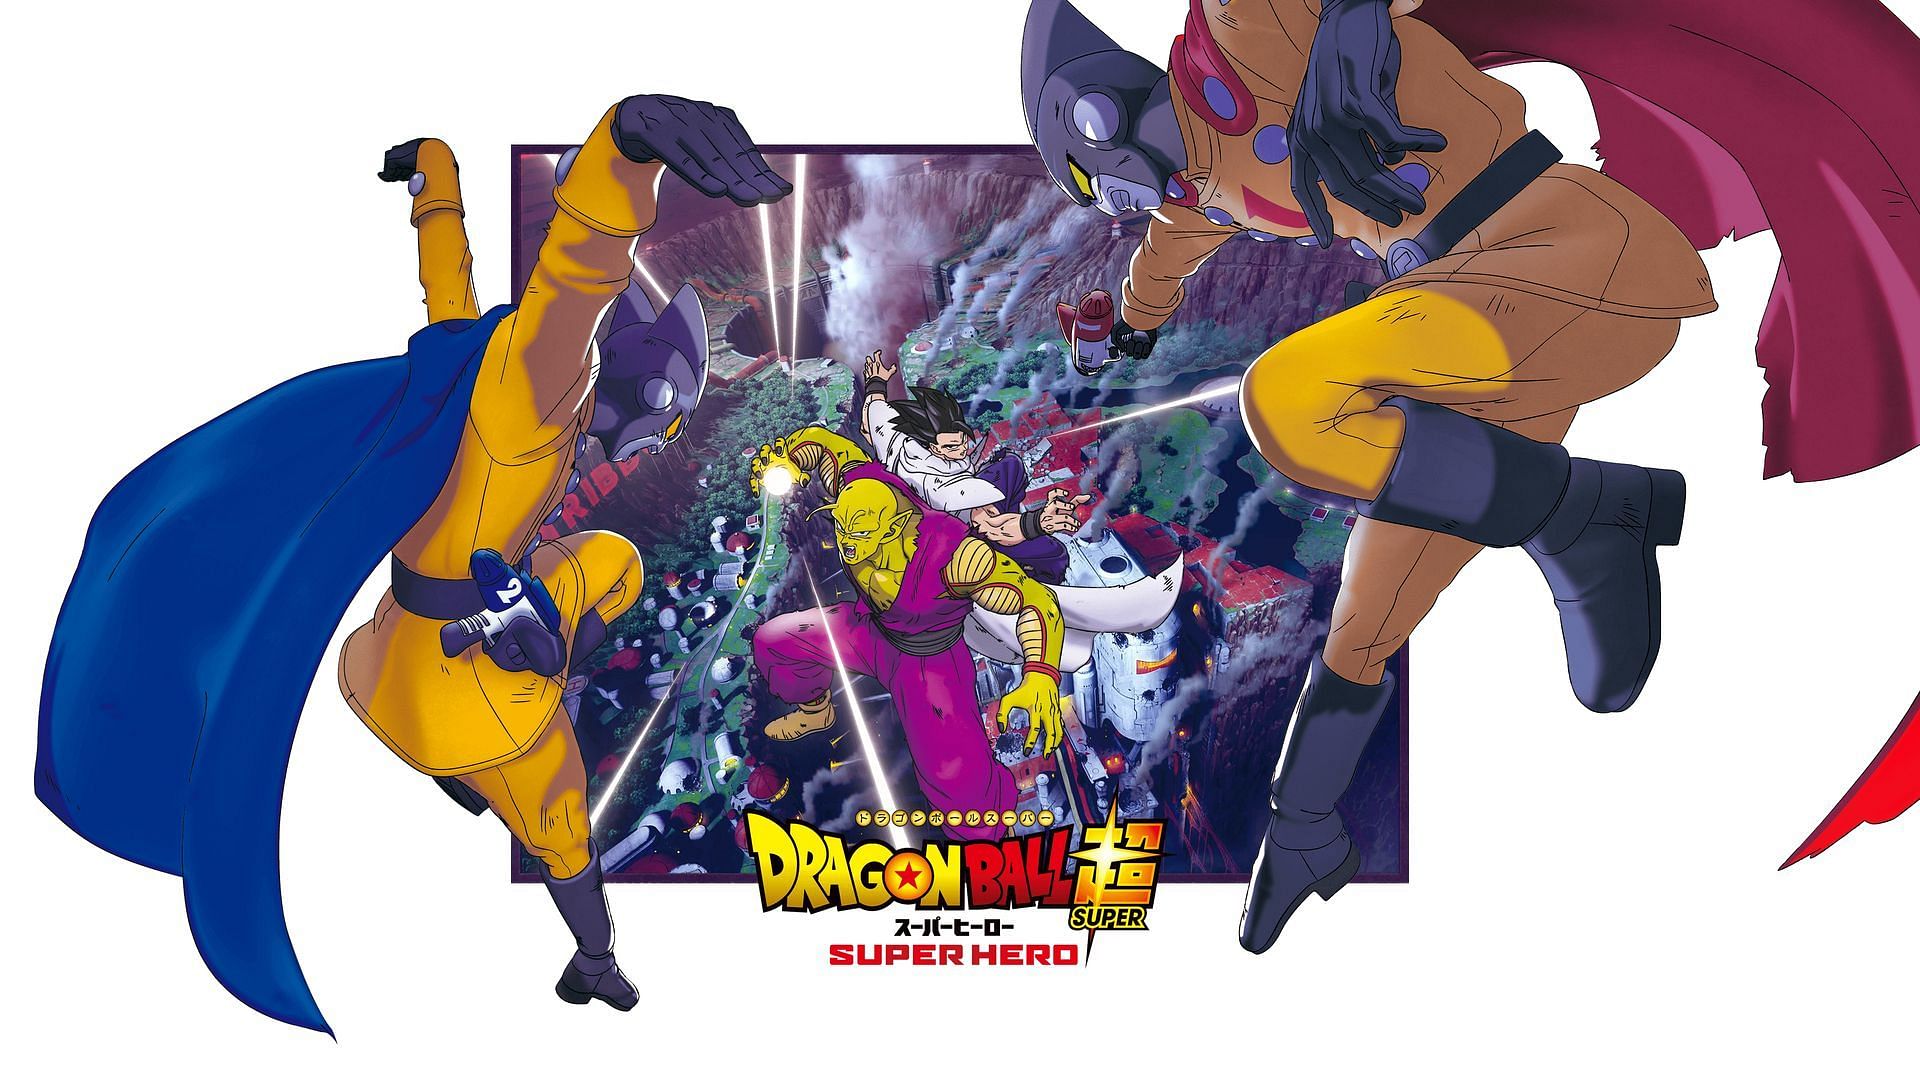 Dragon Ball Super: Super Hero New Release Date Finally Announced